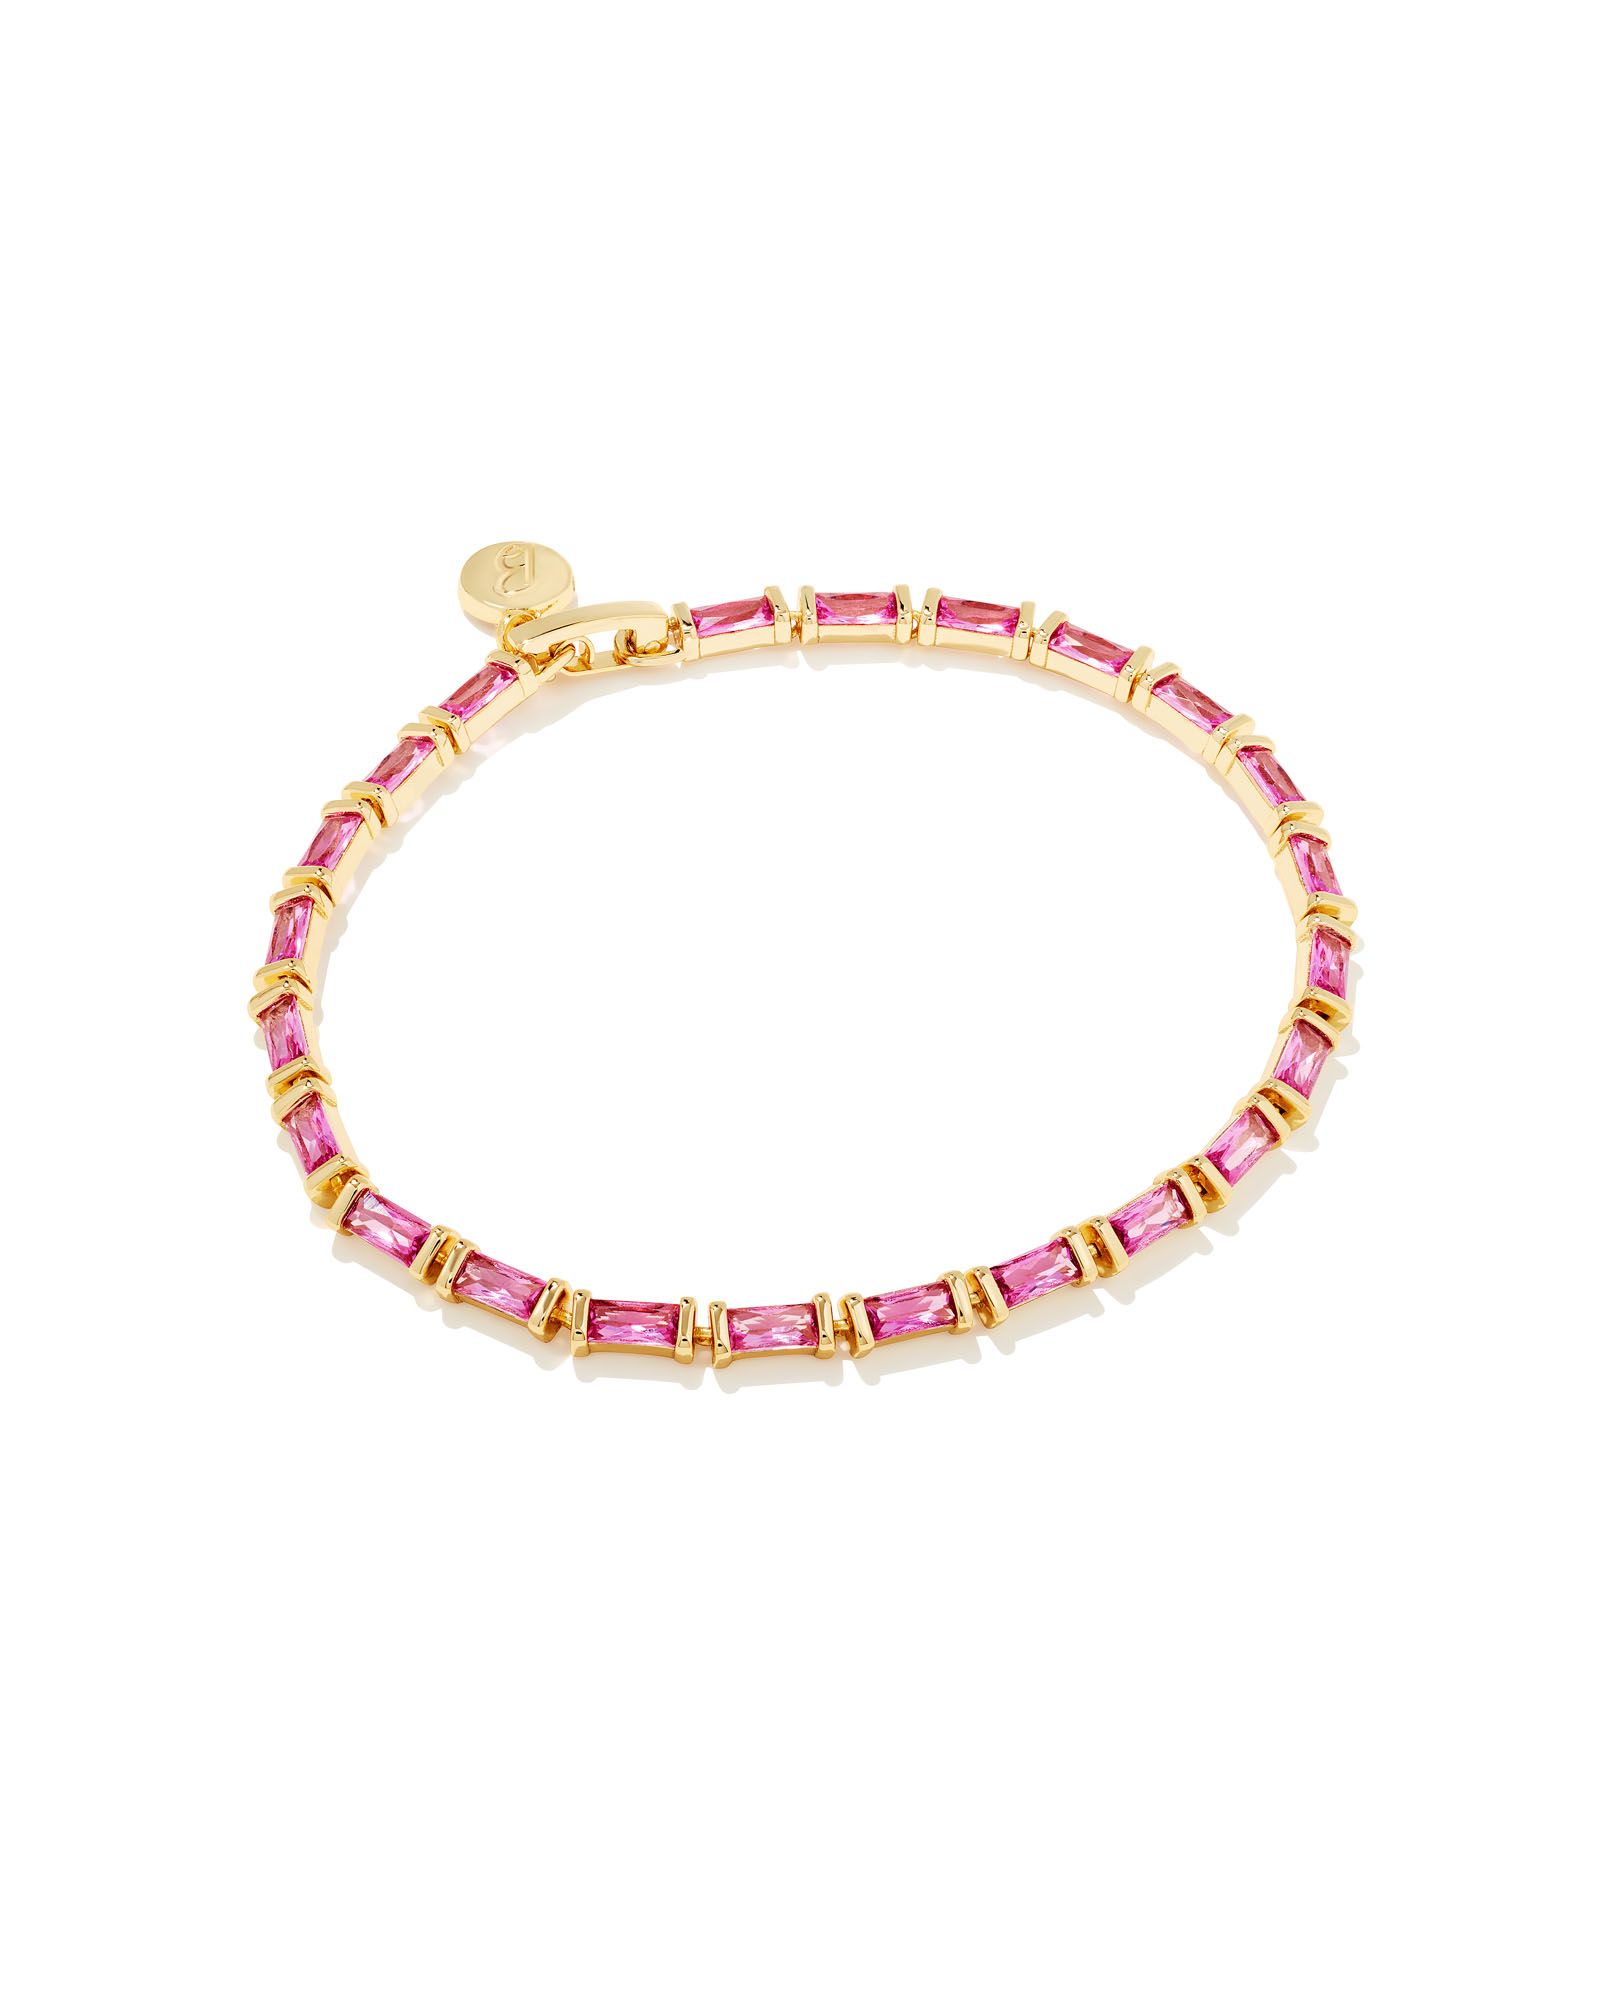 Barbie™ x Kendra Scott Gold Delicate Chain Bracelet in Pink Crystal | Kendra Scott | Kendra Scott